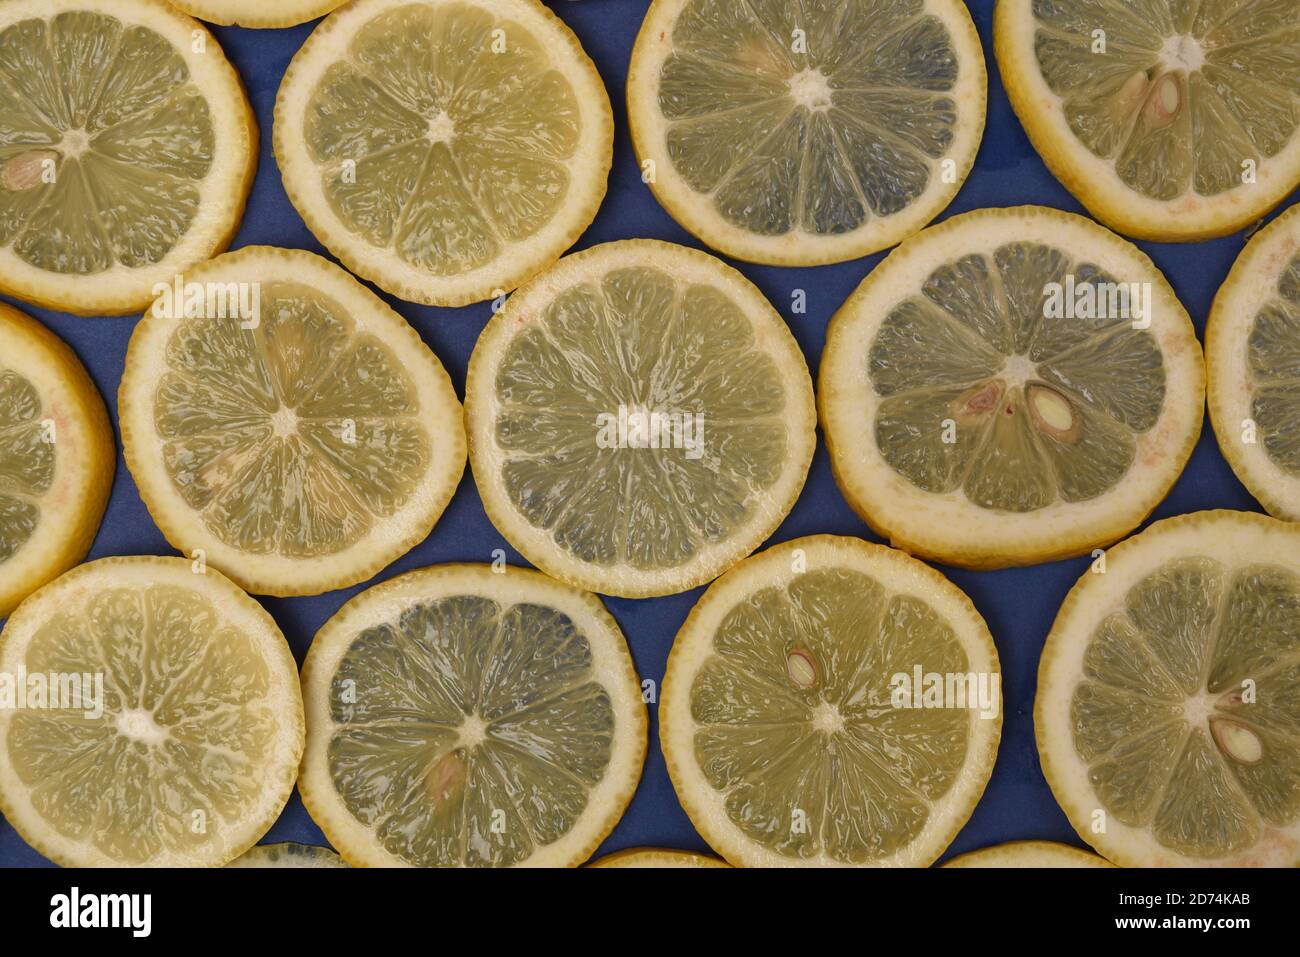 Lemon slices on a blue background Stock Photo